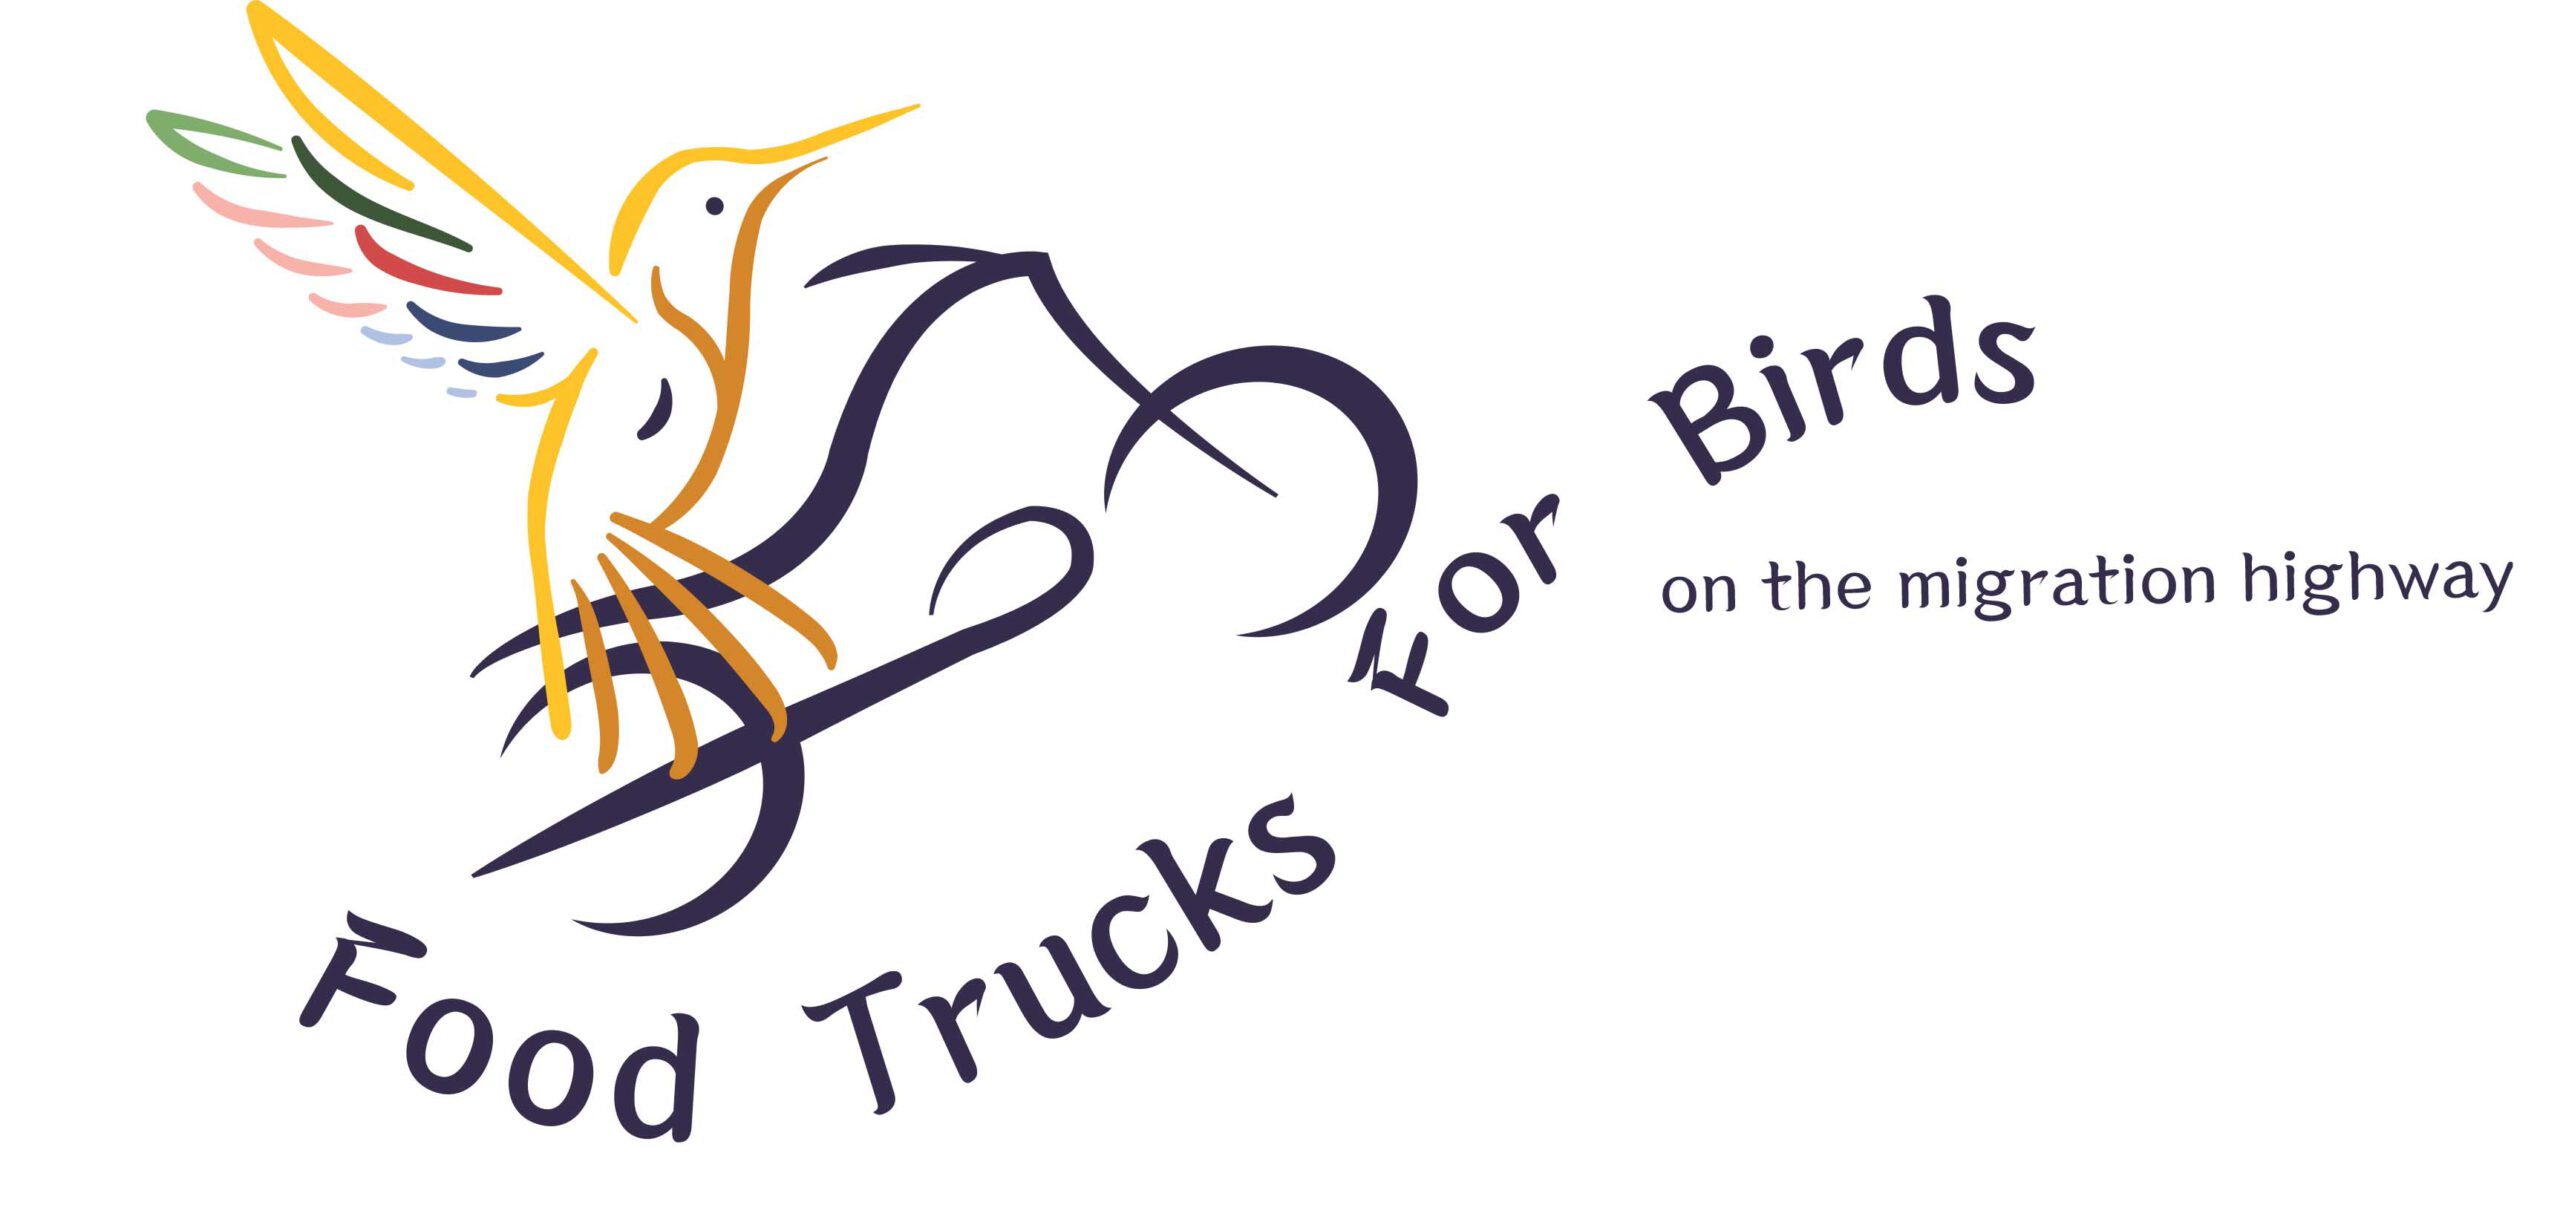 Food Trucks For Birds